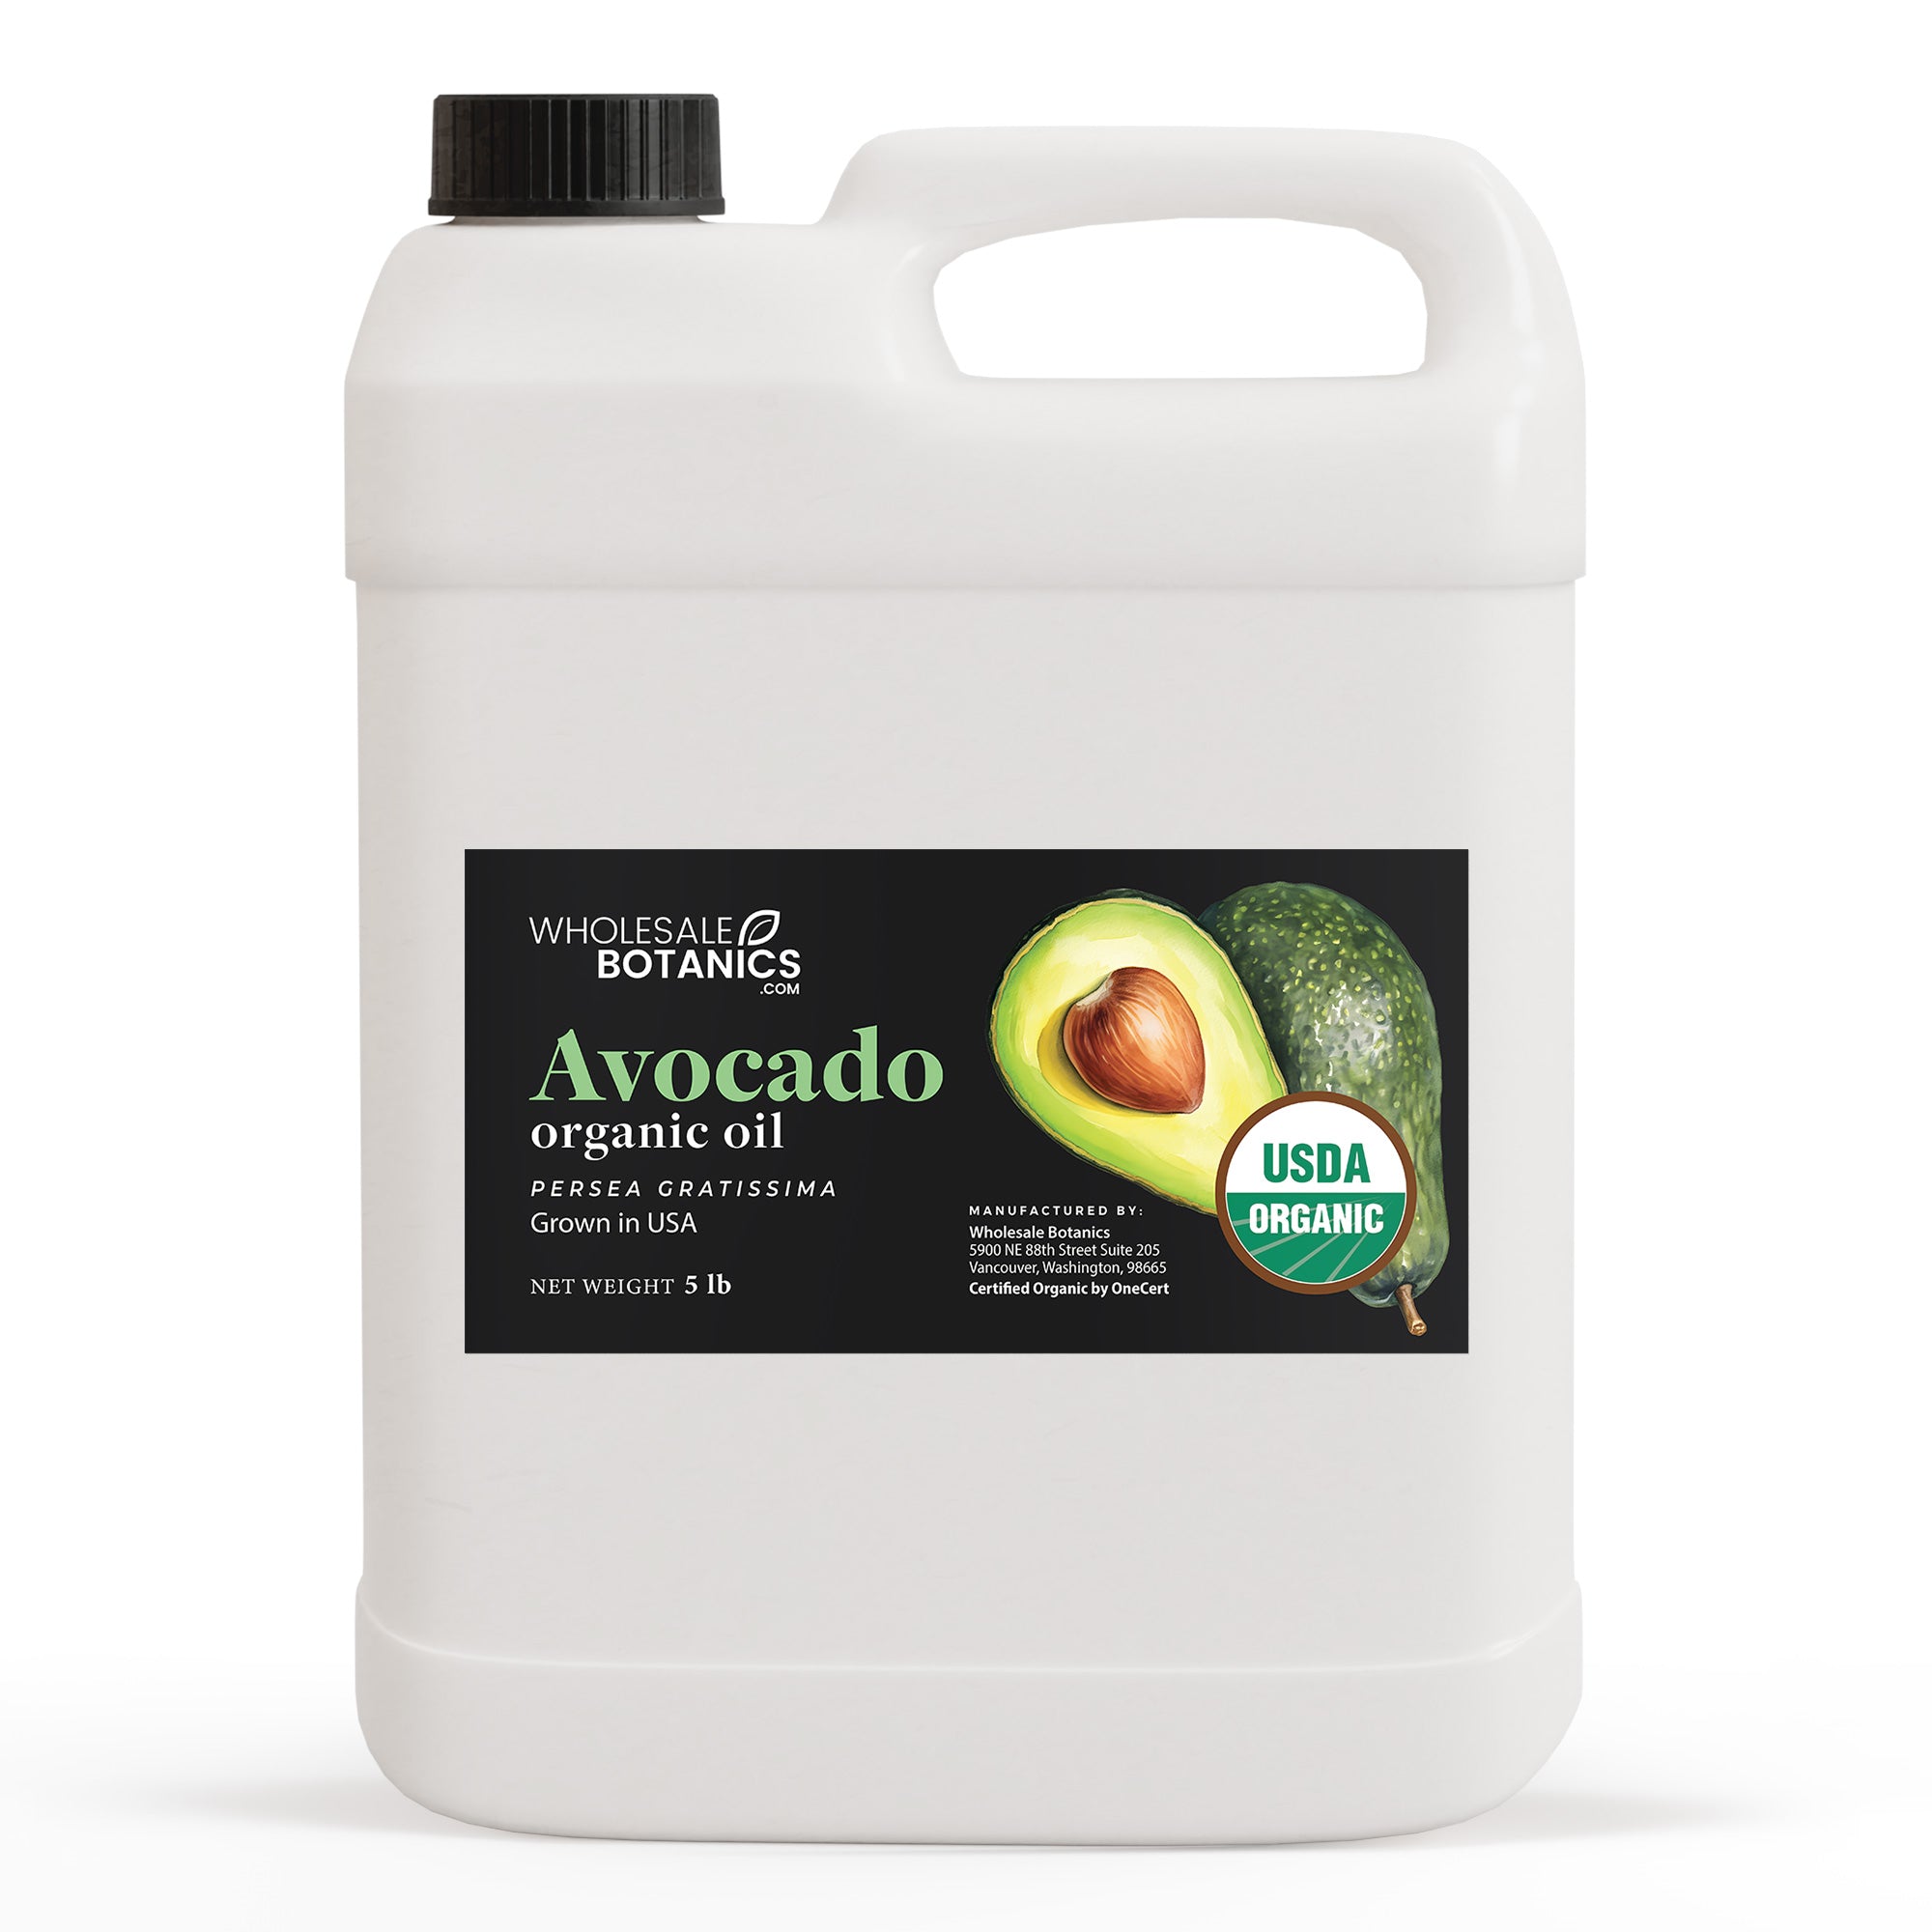 Organic Avocado Oil